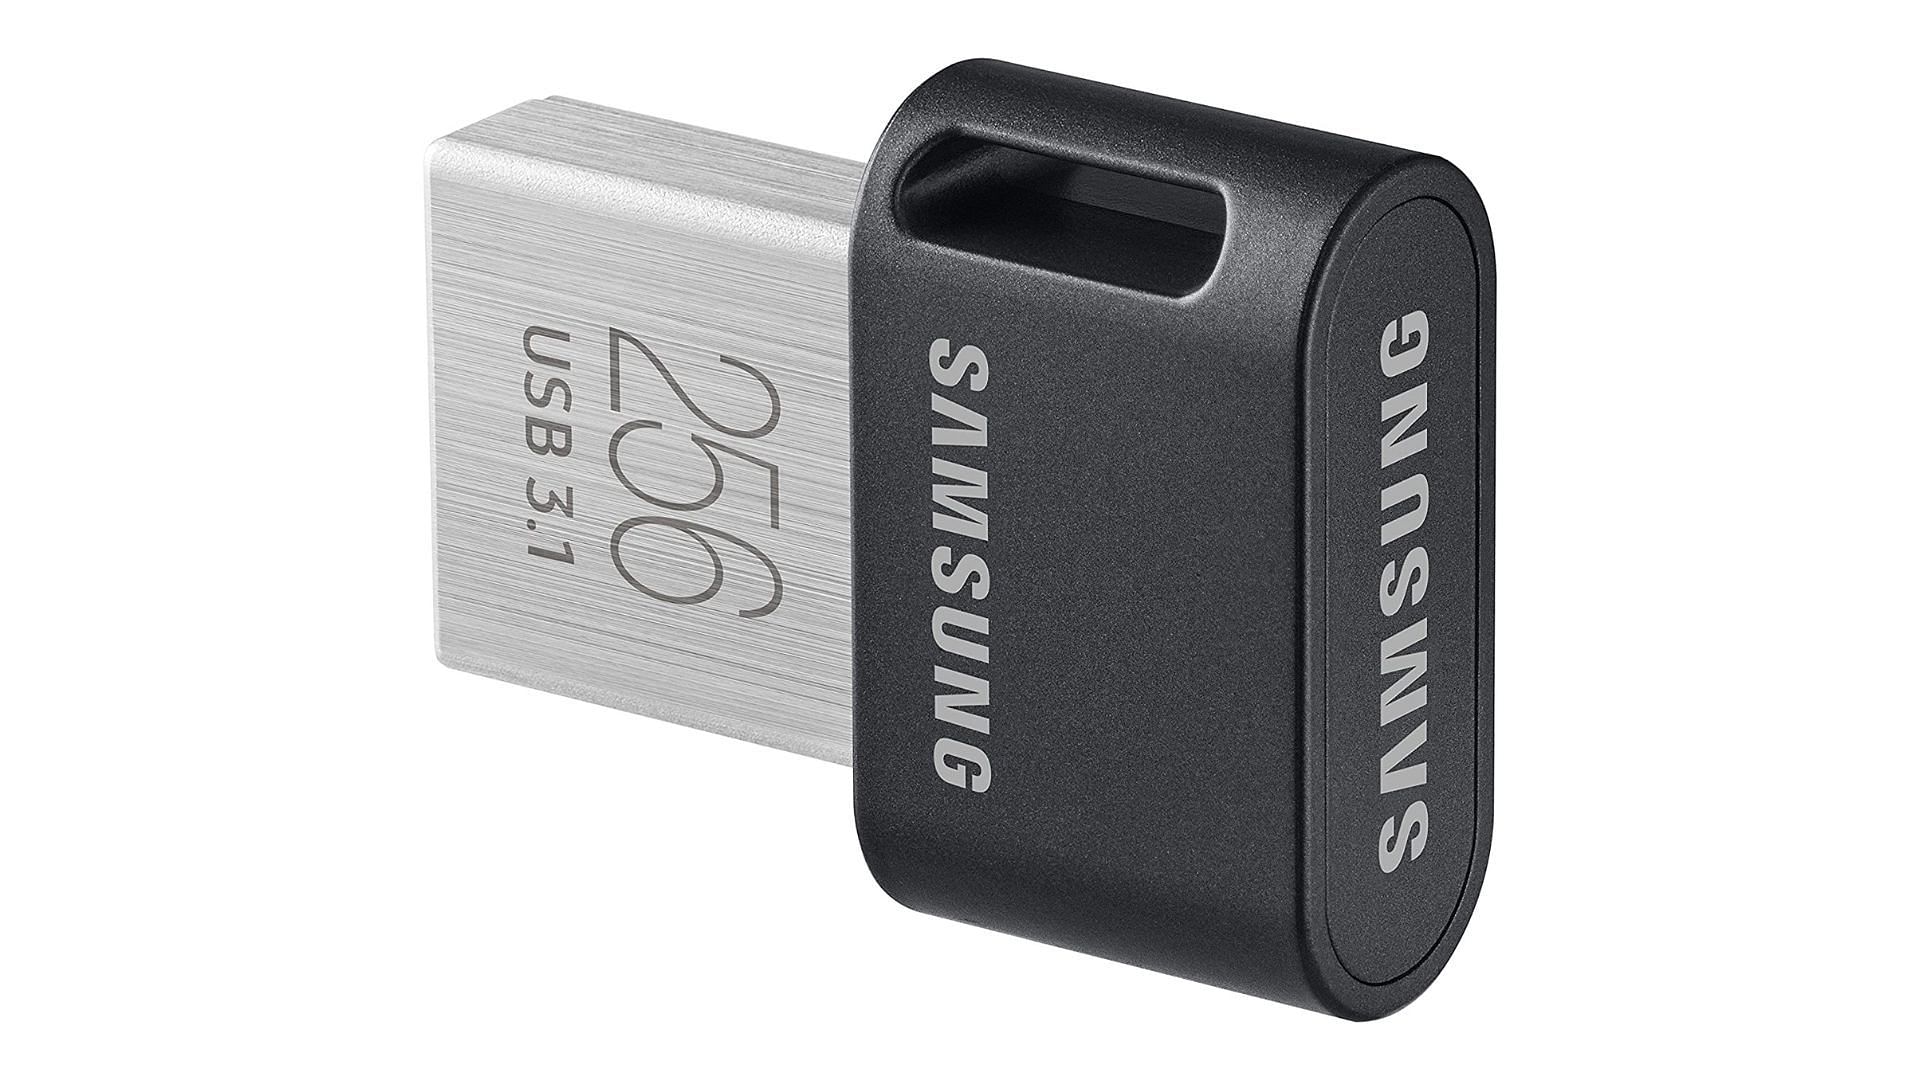 The Samsung MUF-256AB/AM FIT PLUS 256 GB flash drive (Image via Amazon)